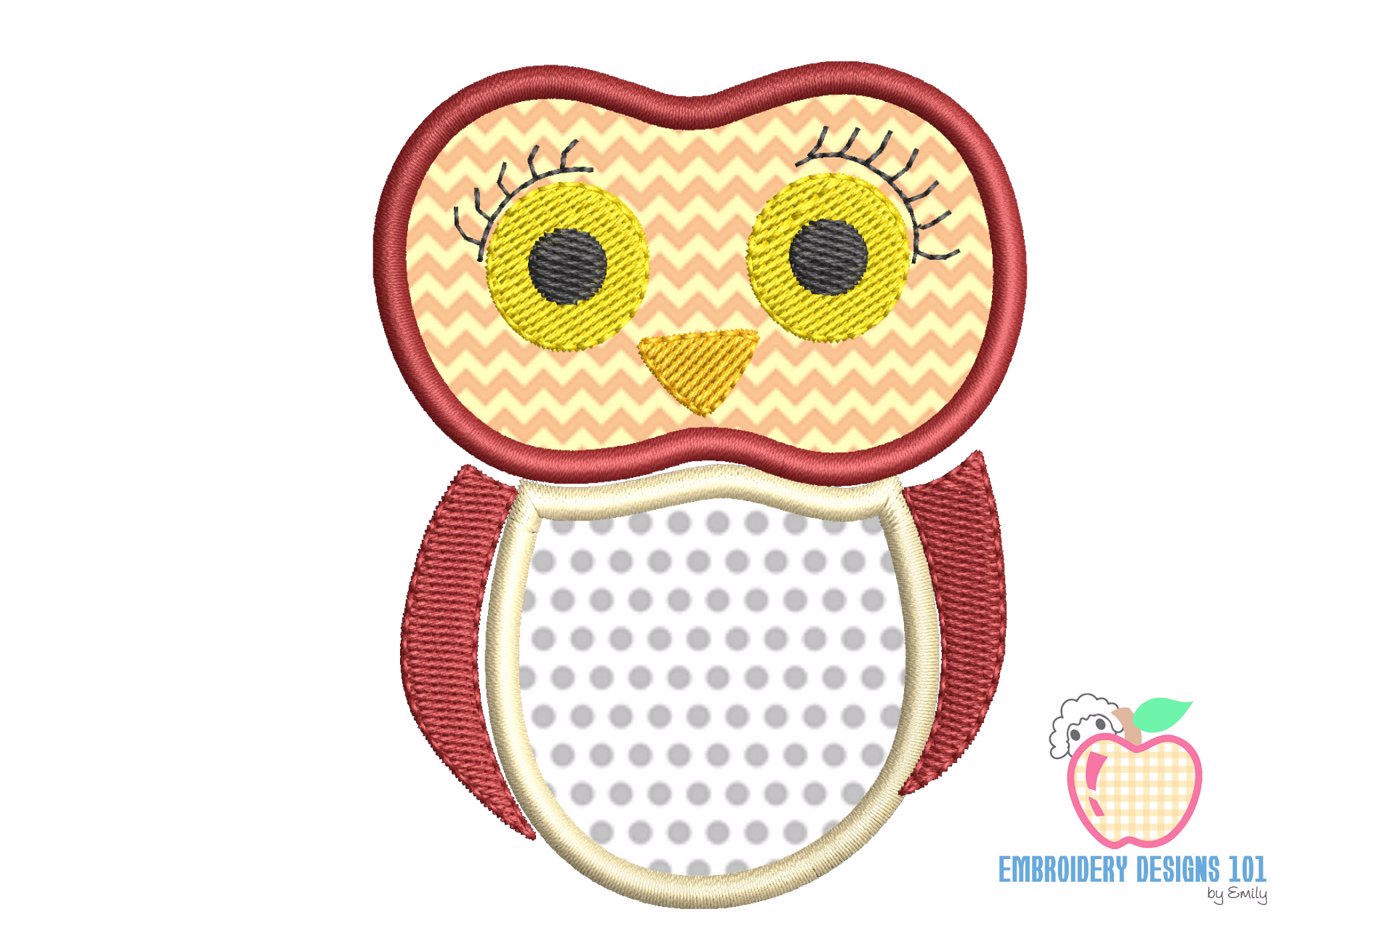 Cute Cartoon Owl Applique Design